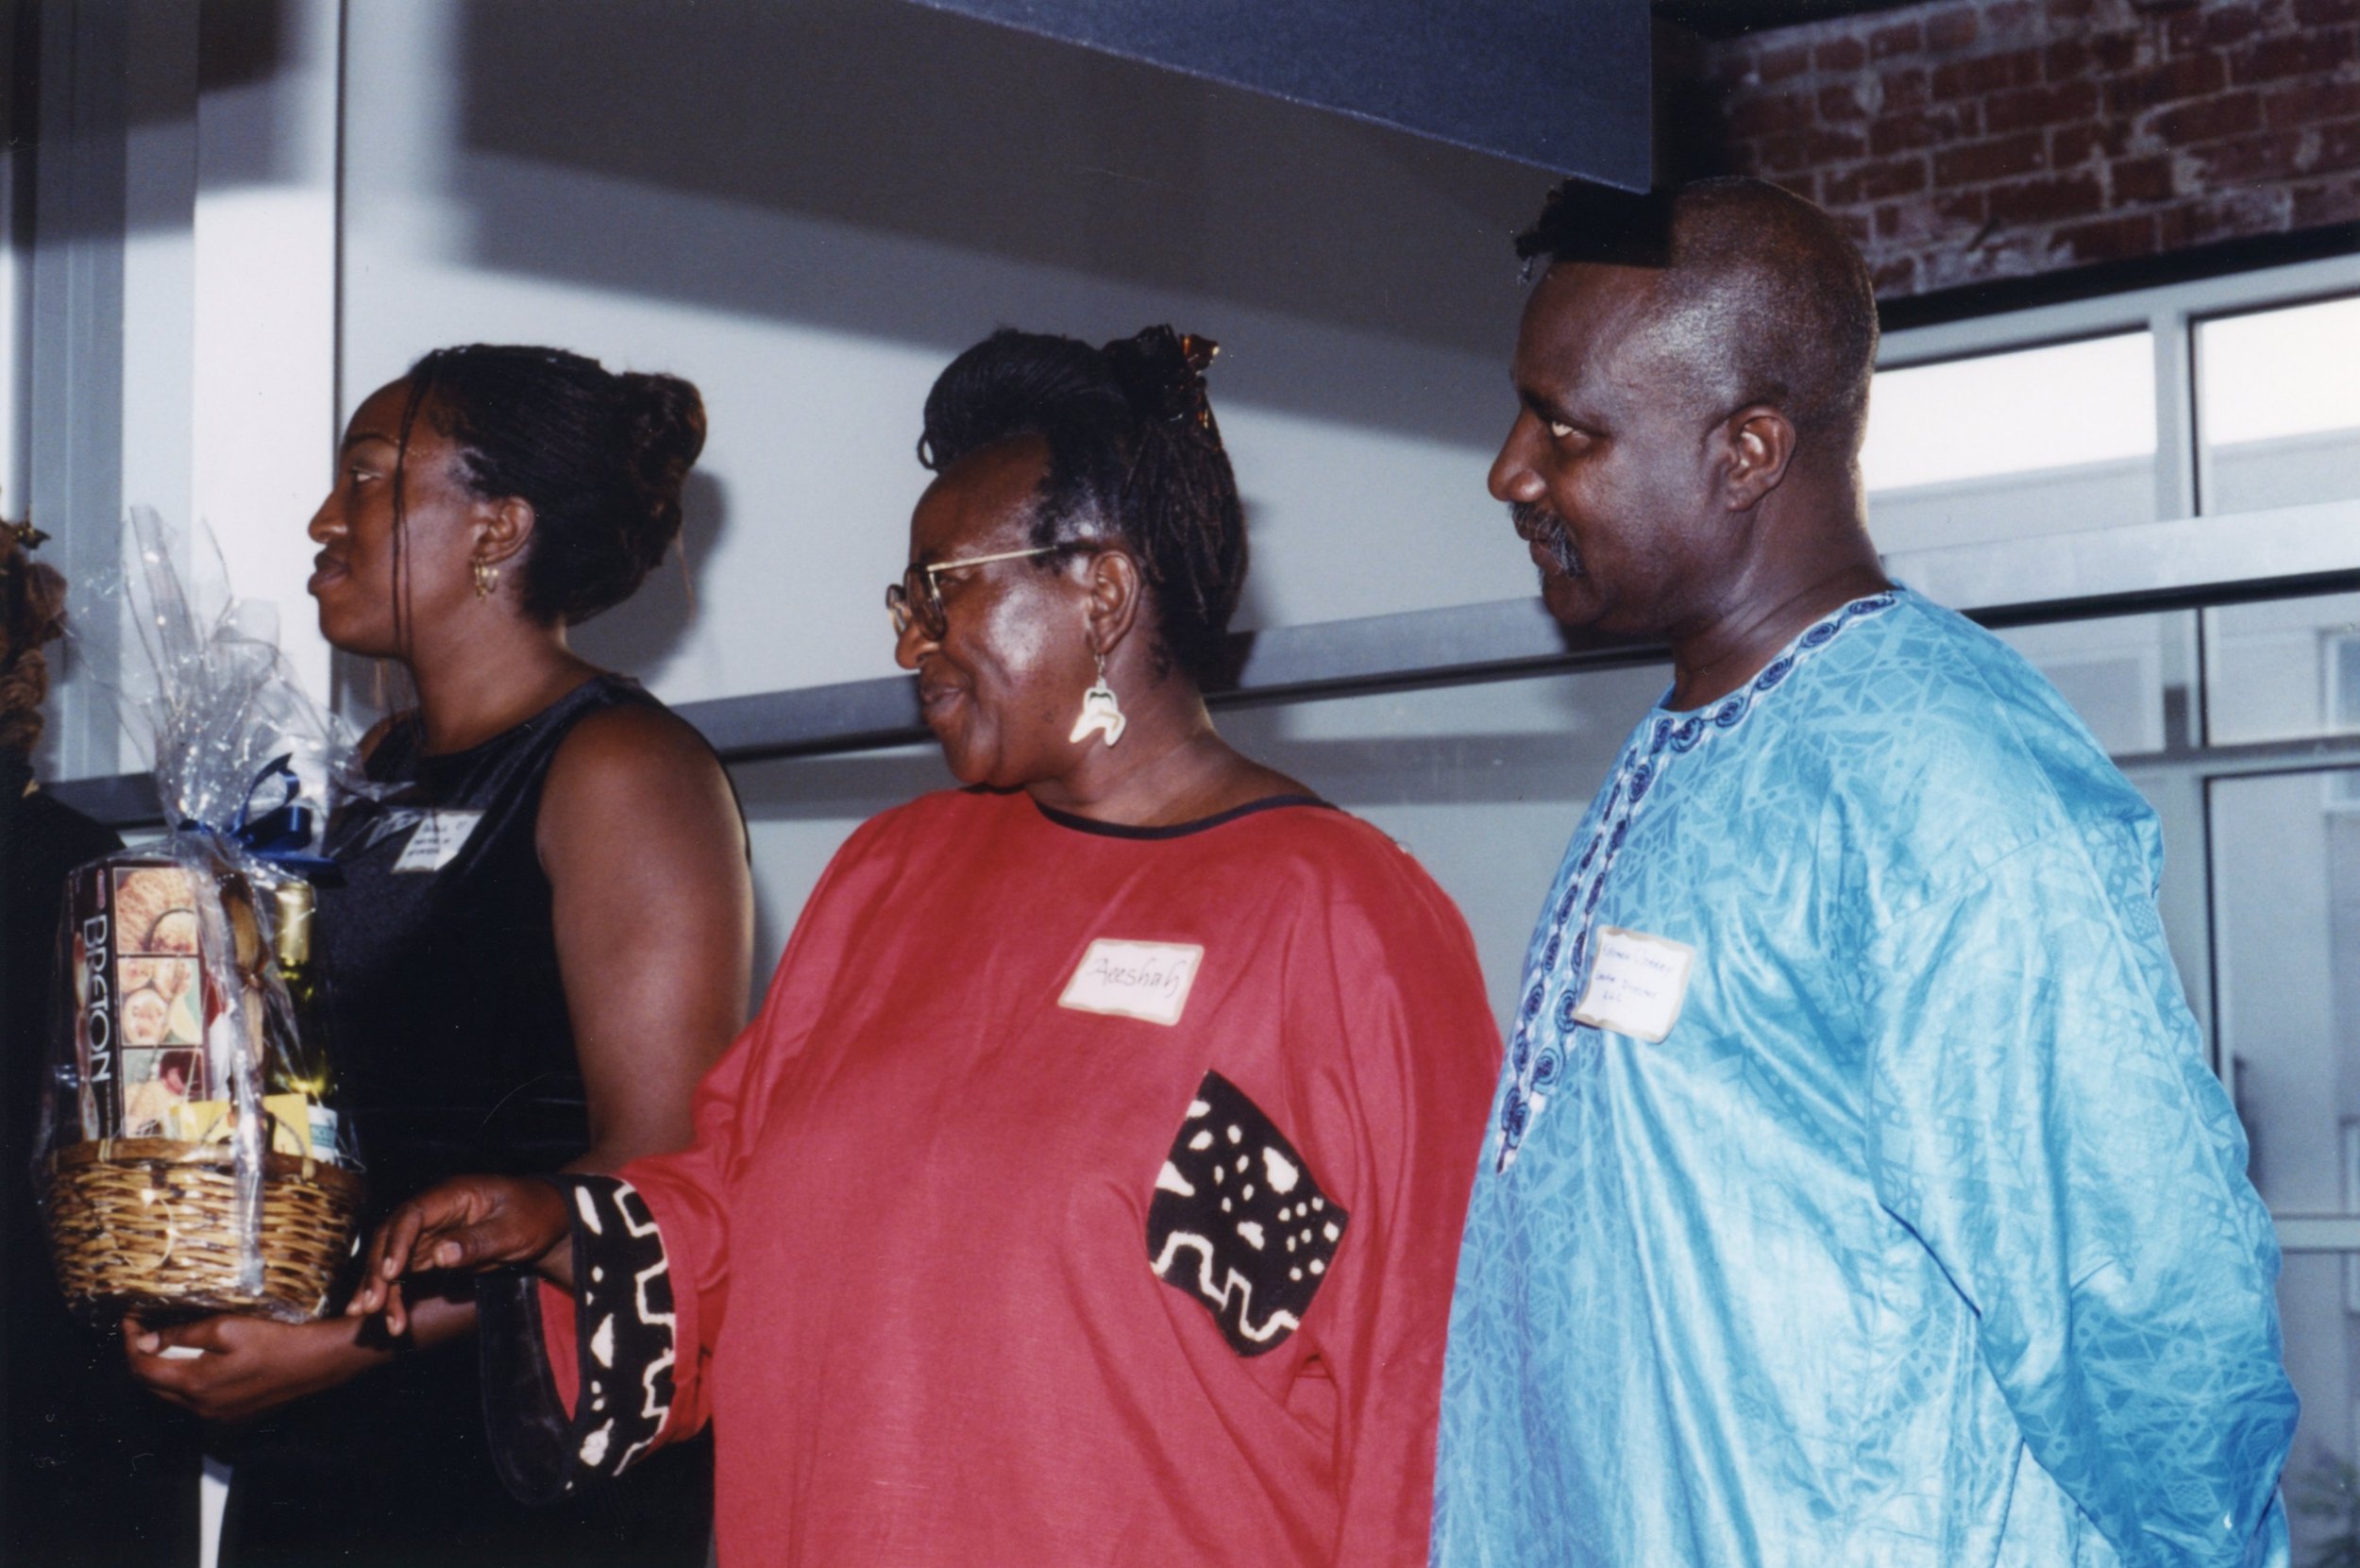   Amana, Aeeshah, and Kokomon at a celebratory event.  